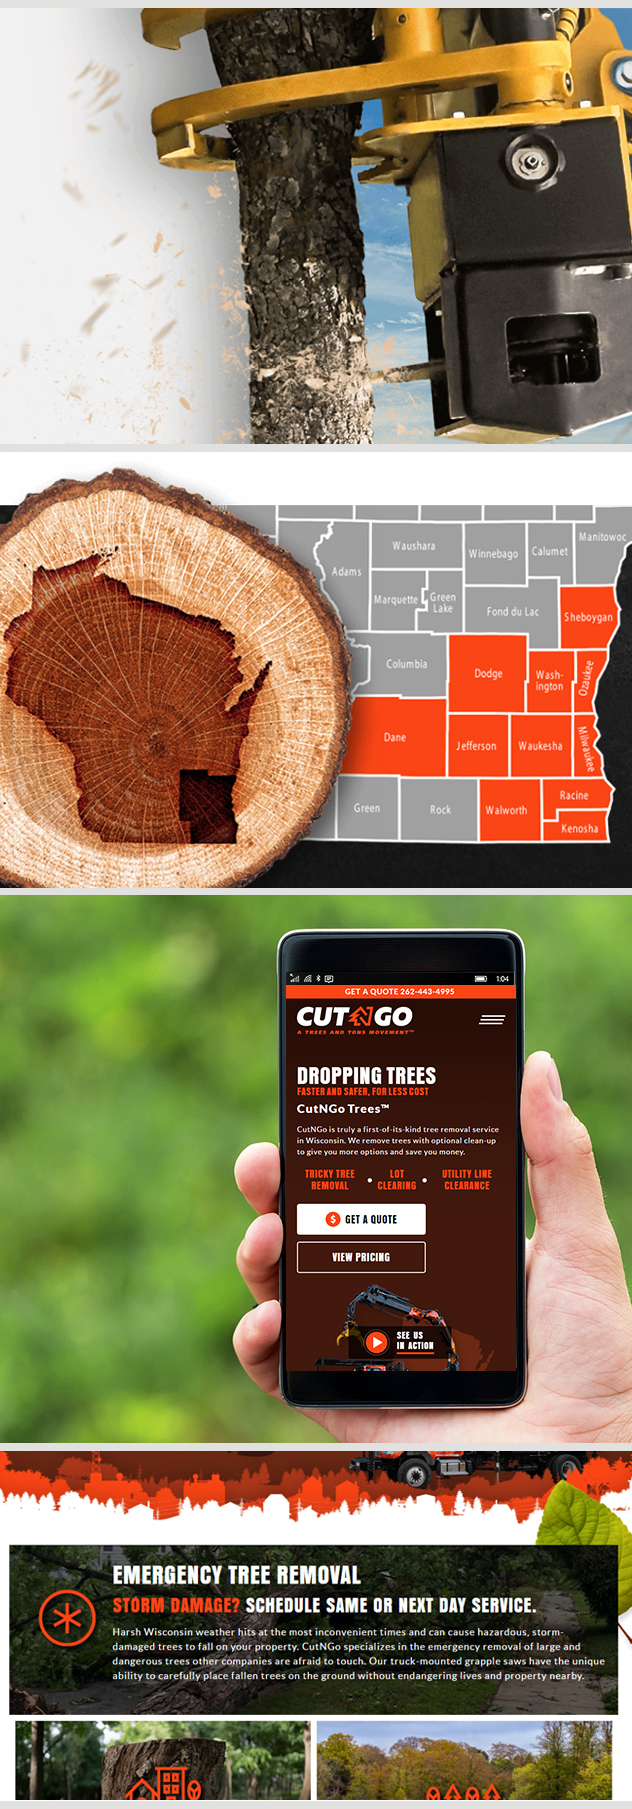 Milwaukee web marketing forCut N GO Trees